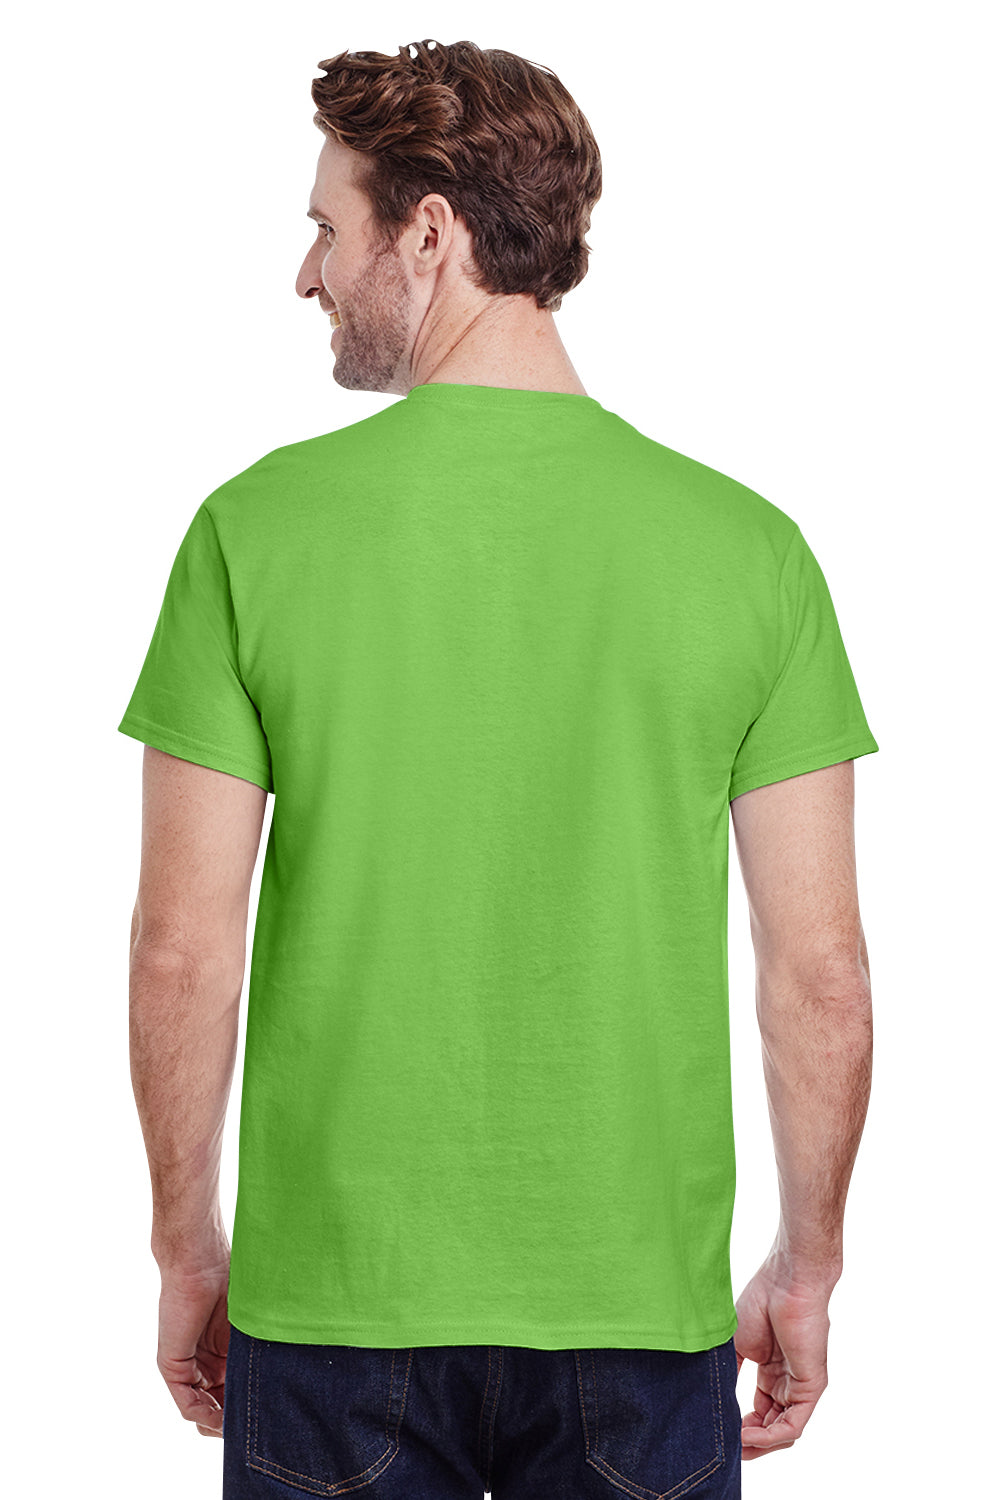 Gildan G200 Mens Ultra Short Sleeve Crewneck T-Shirt Lime Green Back